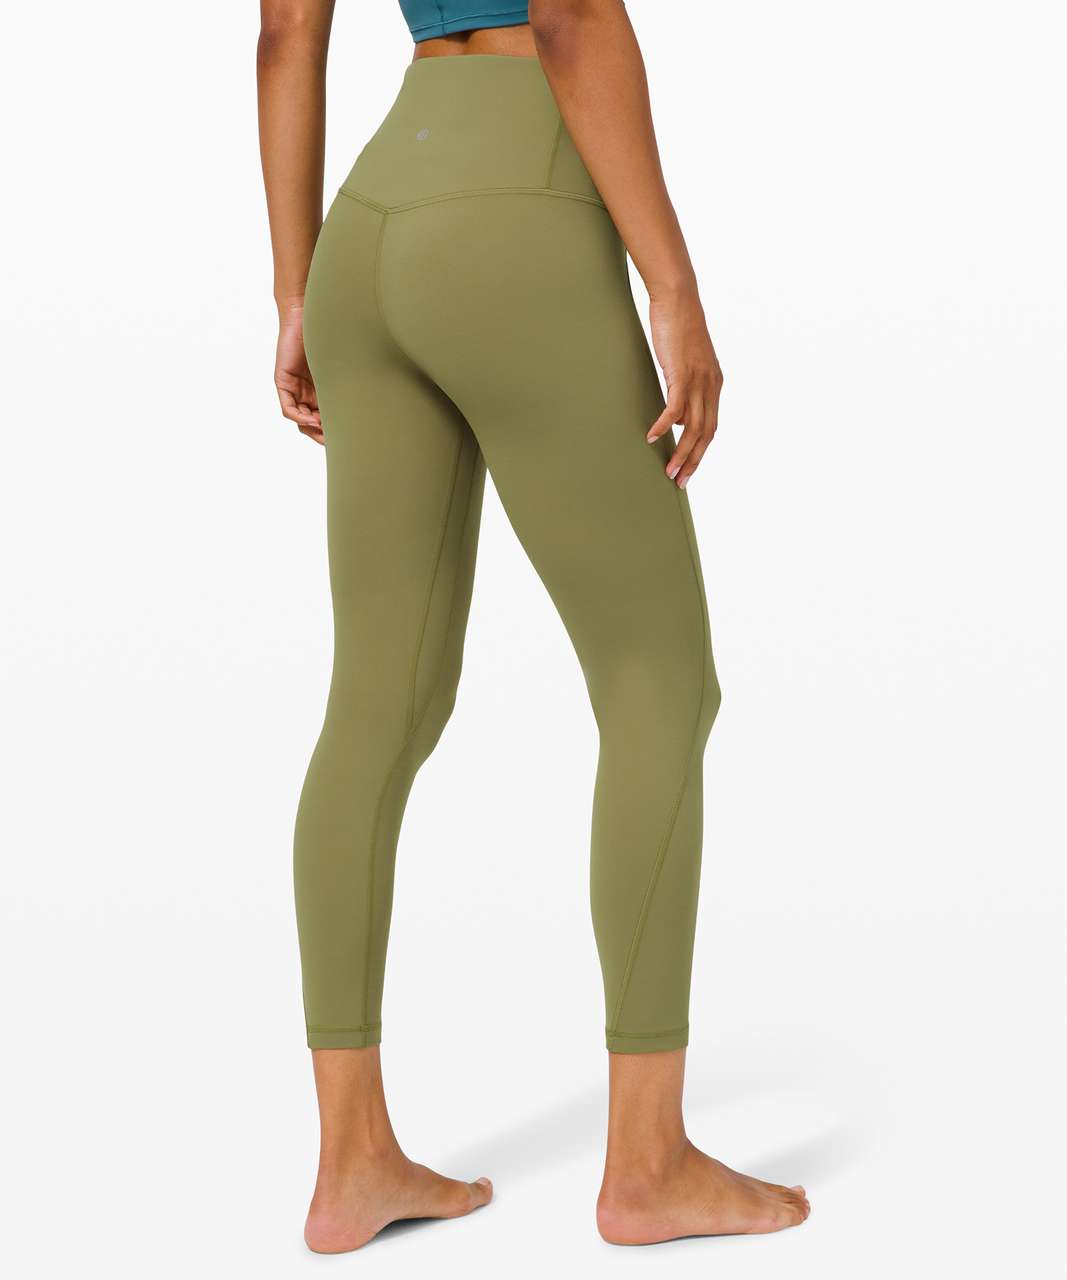 Green Womens Lululemon Size 36E Supplier - Lululemon Sale